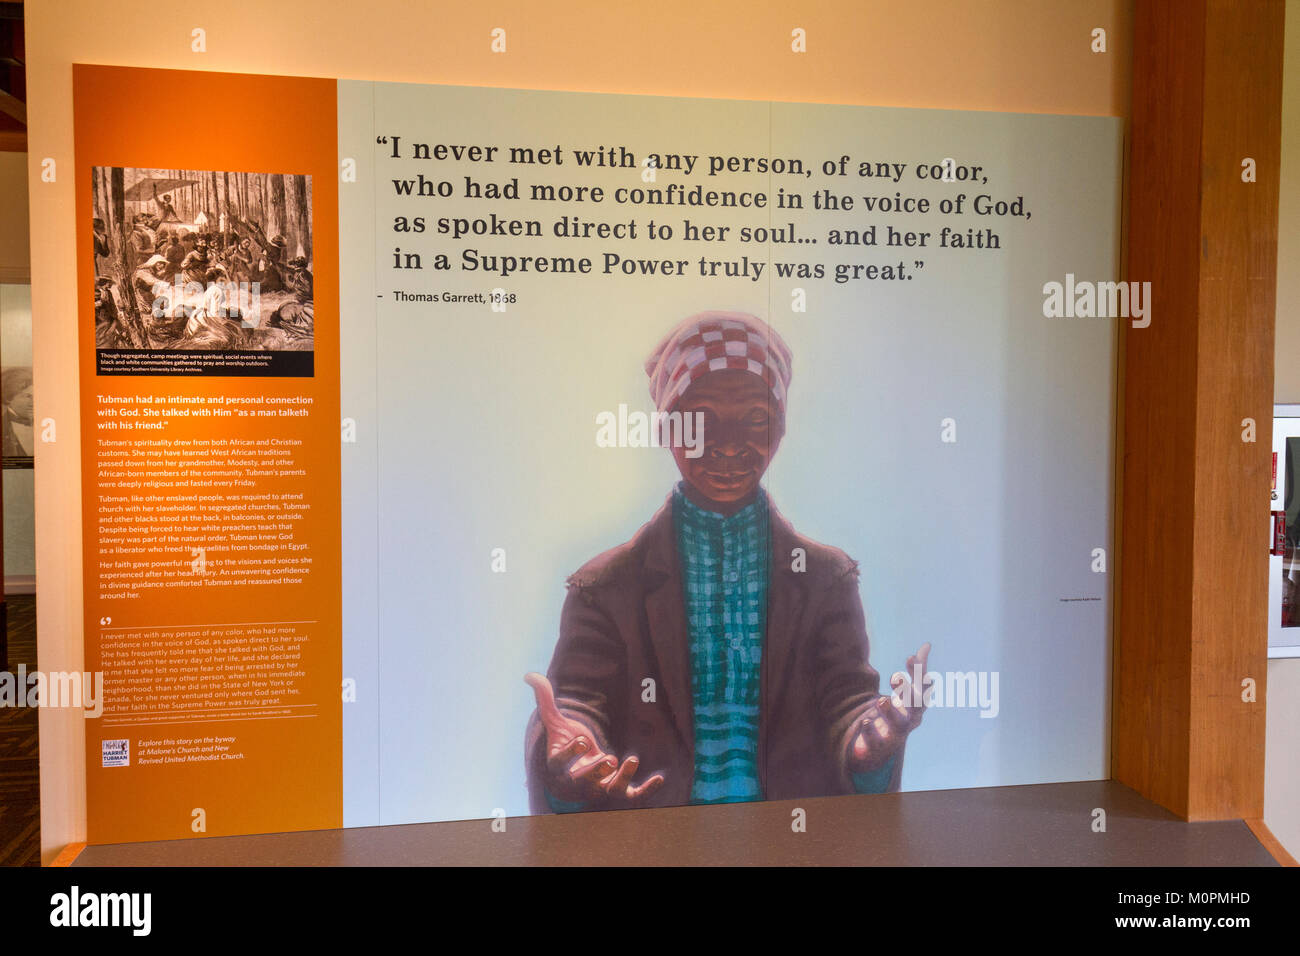 Citazione da Thomas Garrett circa Harriet Tubman, The Harriet Tubman Underground Railroad Visitor Center, Chiesa Creek, Maryland, Stati Uniti. Foto Stock